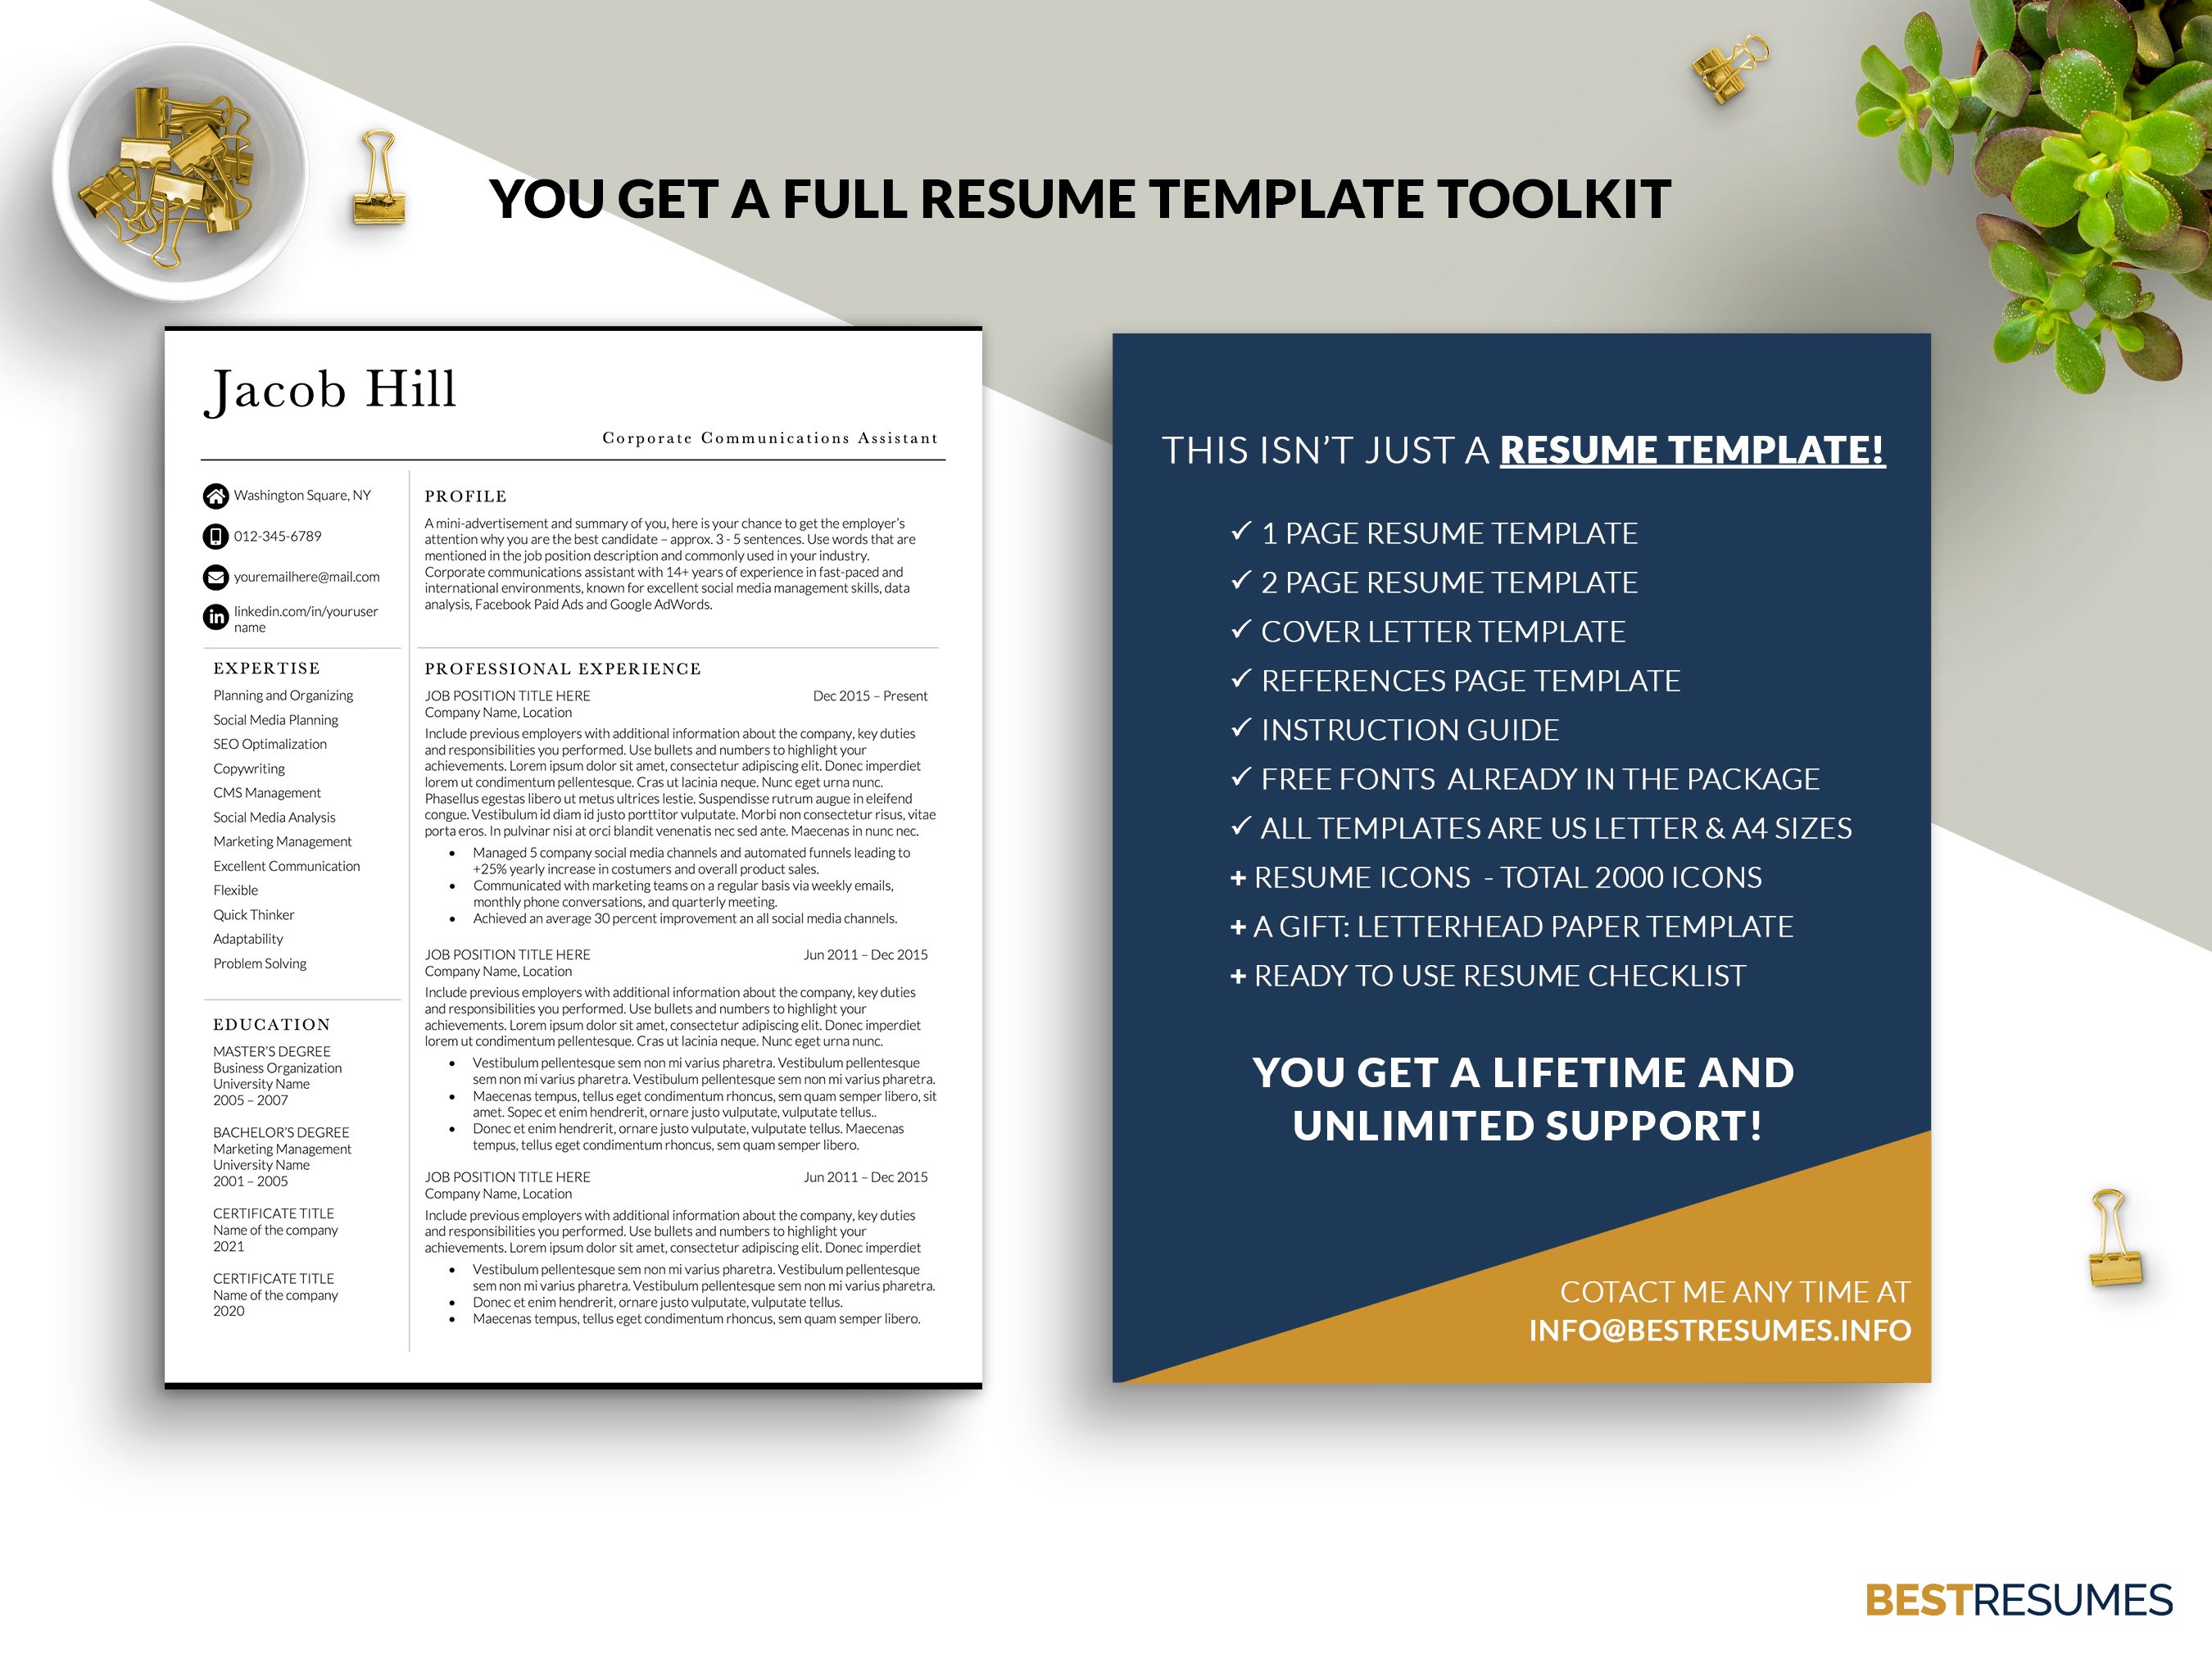 marketing communications resume help cv resume template jacob hill 416